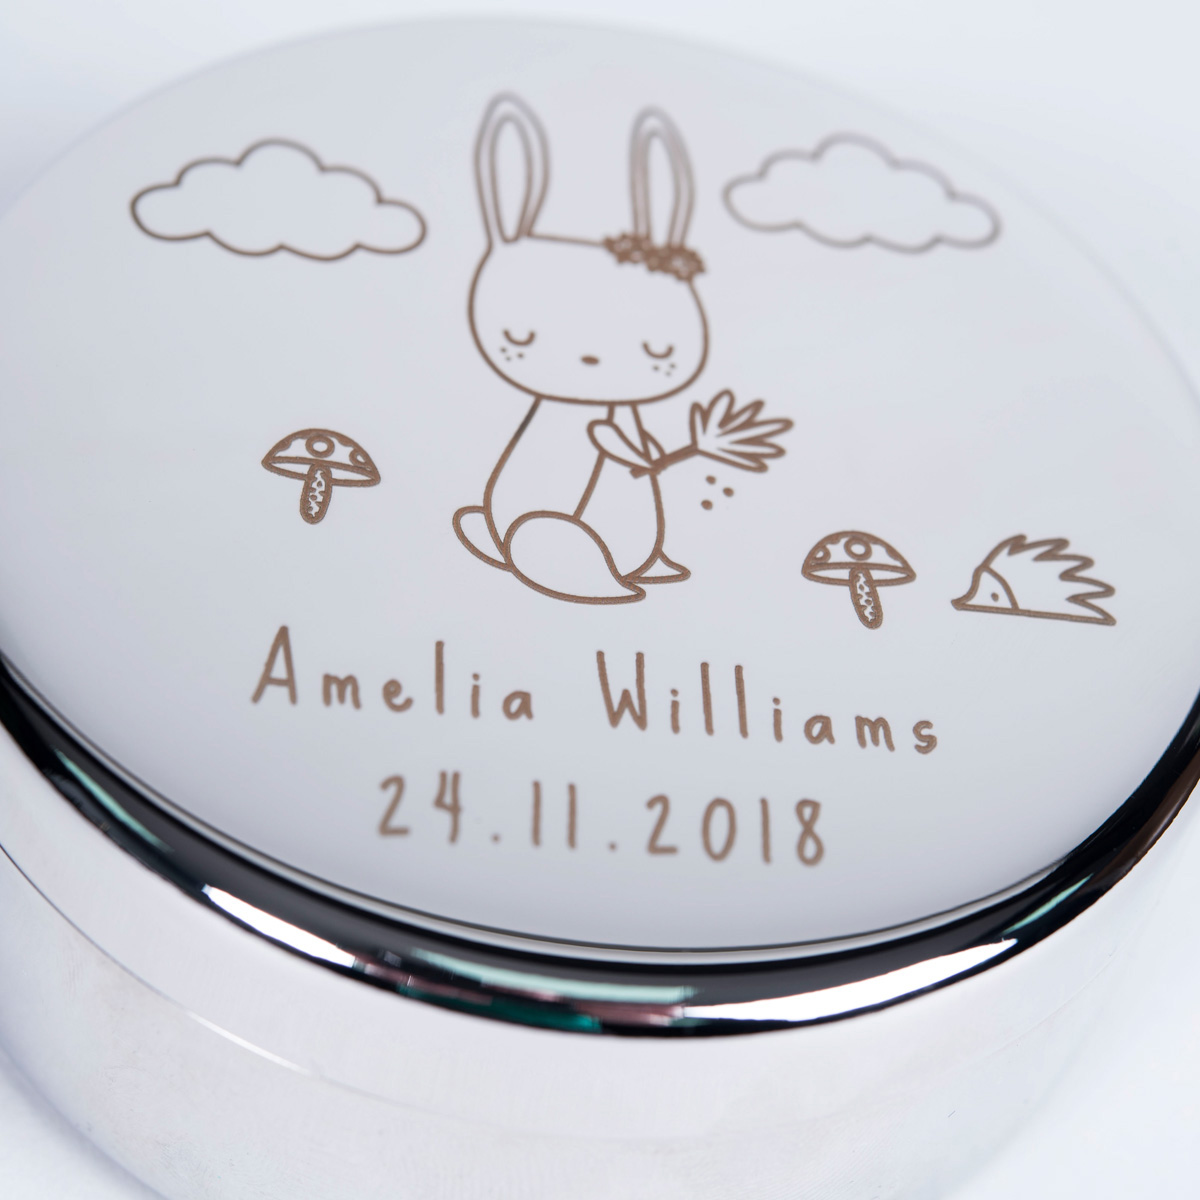 Engraved Circular Trinket Box - Bunny